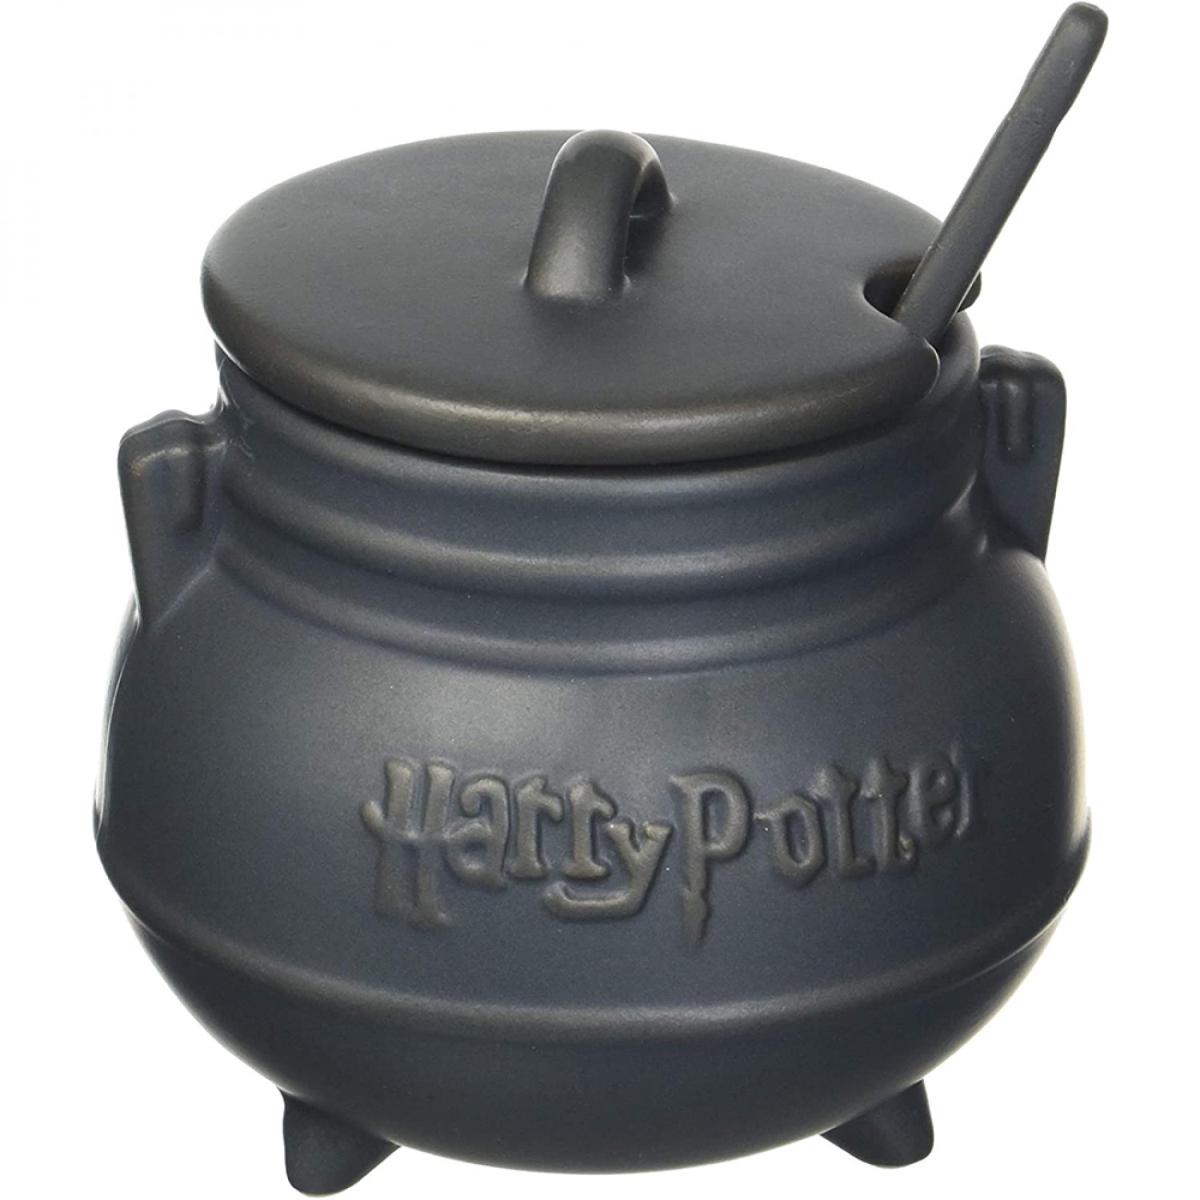 HARRY POTTER 833446 Harry Potter Iron Cast Style Cauldron Ceramic Mug with Spoon